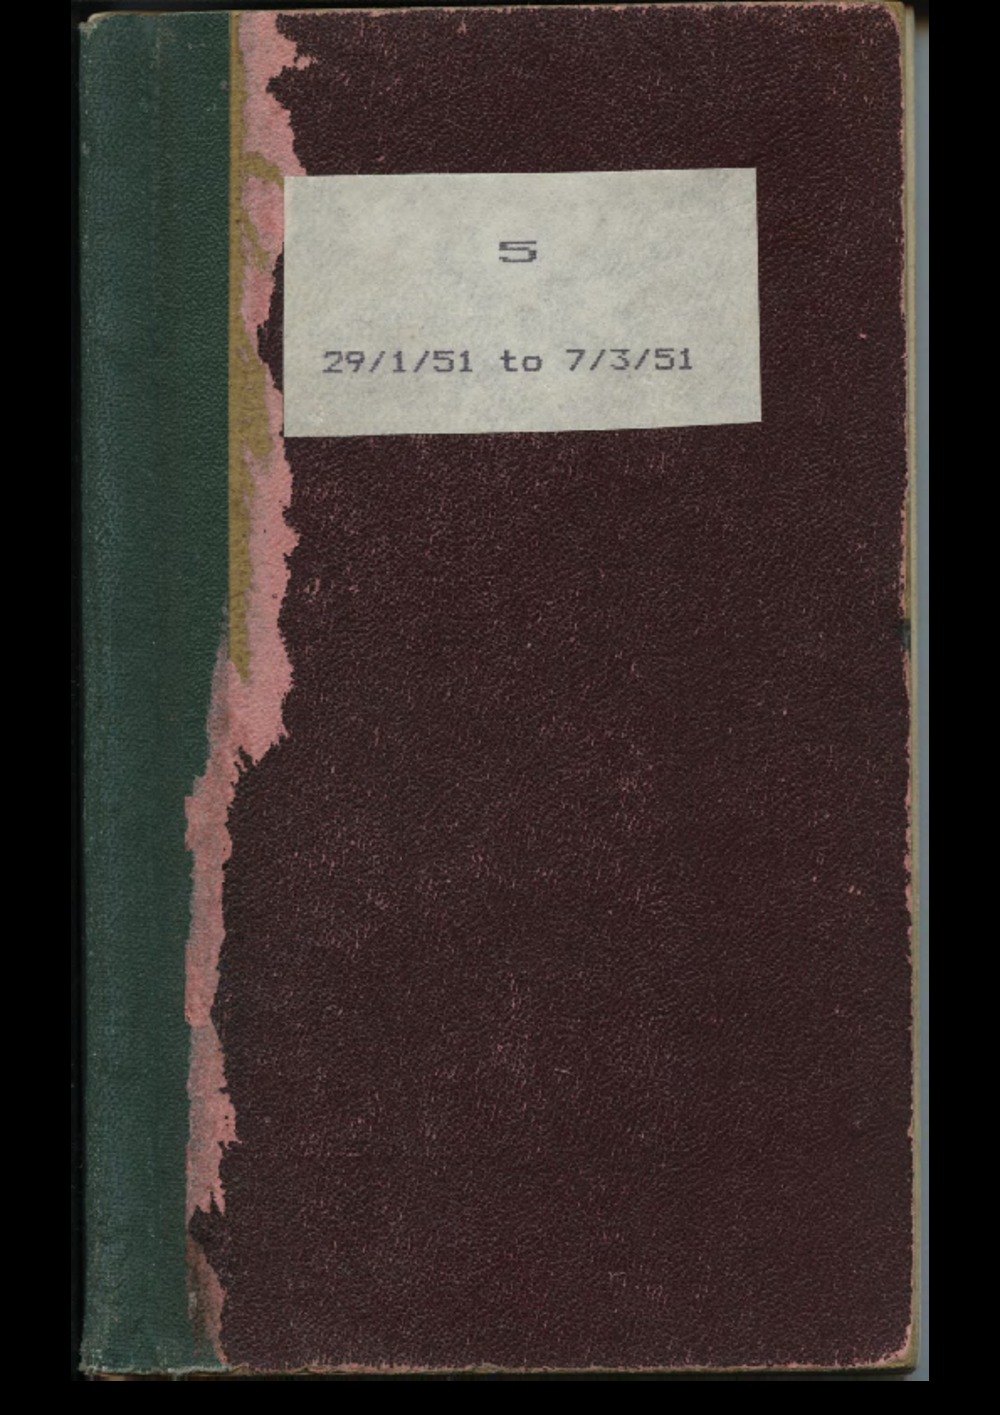 Article: Lenaerts Notebook 5 (29 Jan - 7 Mar 1951)